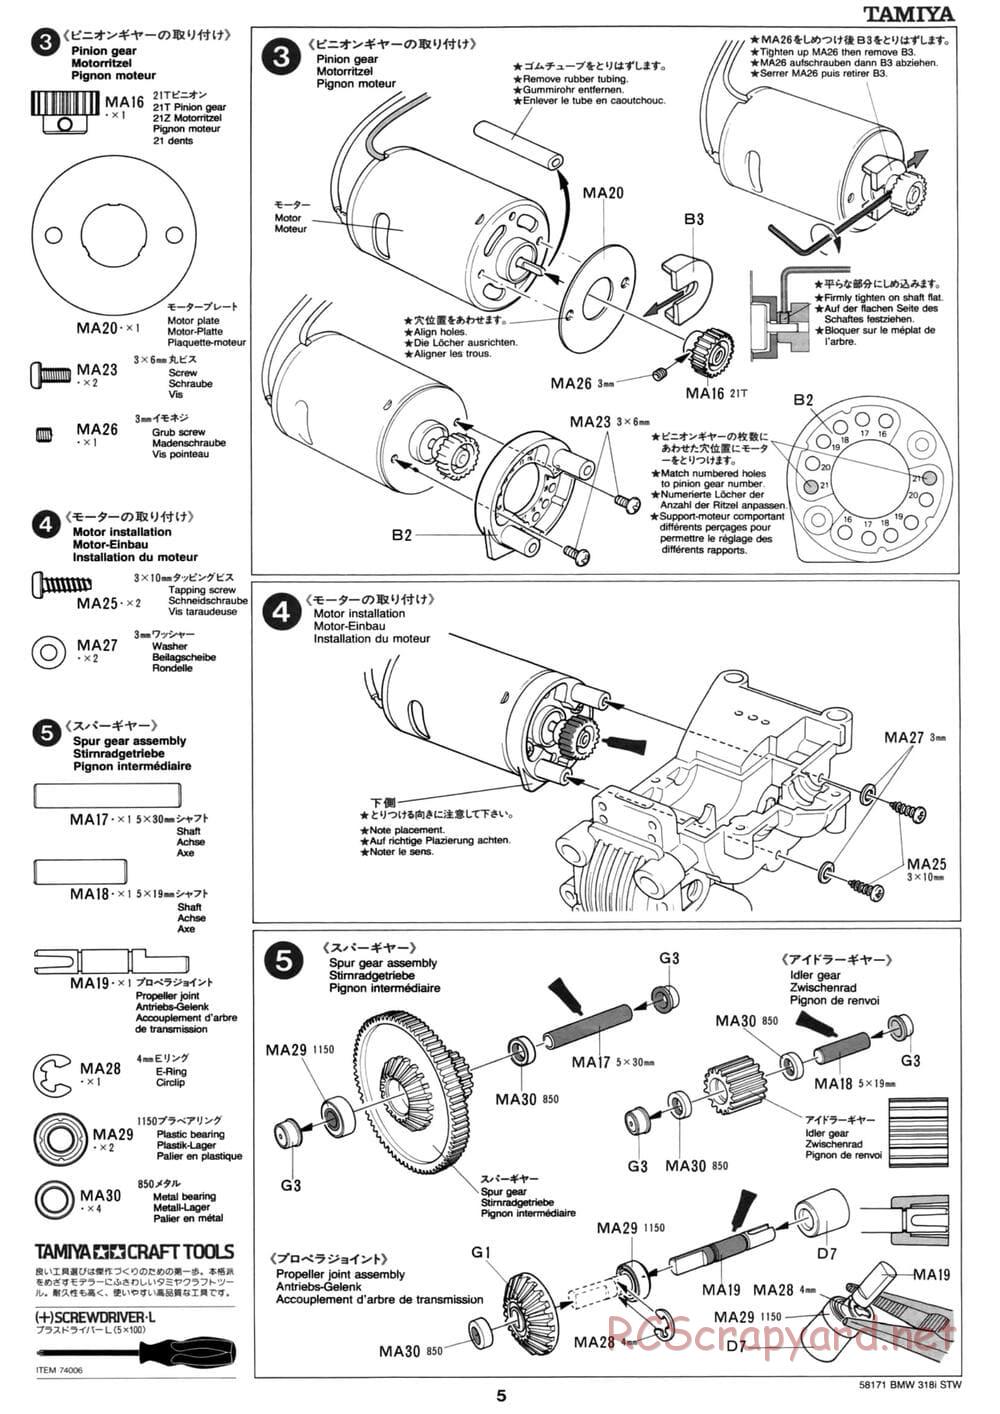 Tamiya - BMW 318i STW - TA-02 Chassis - Manual - Page 5